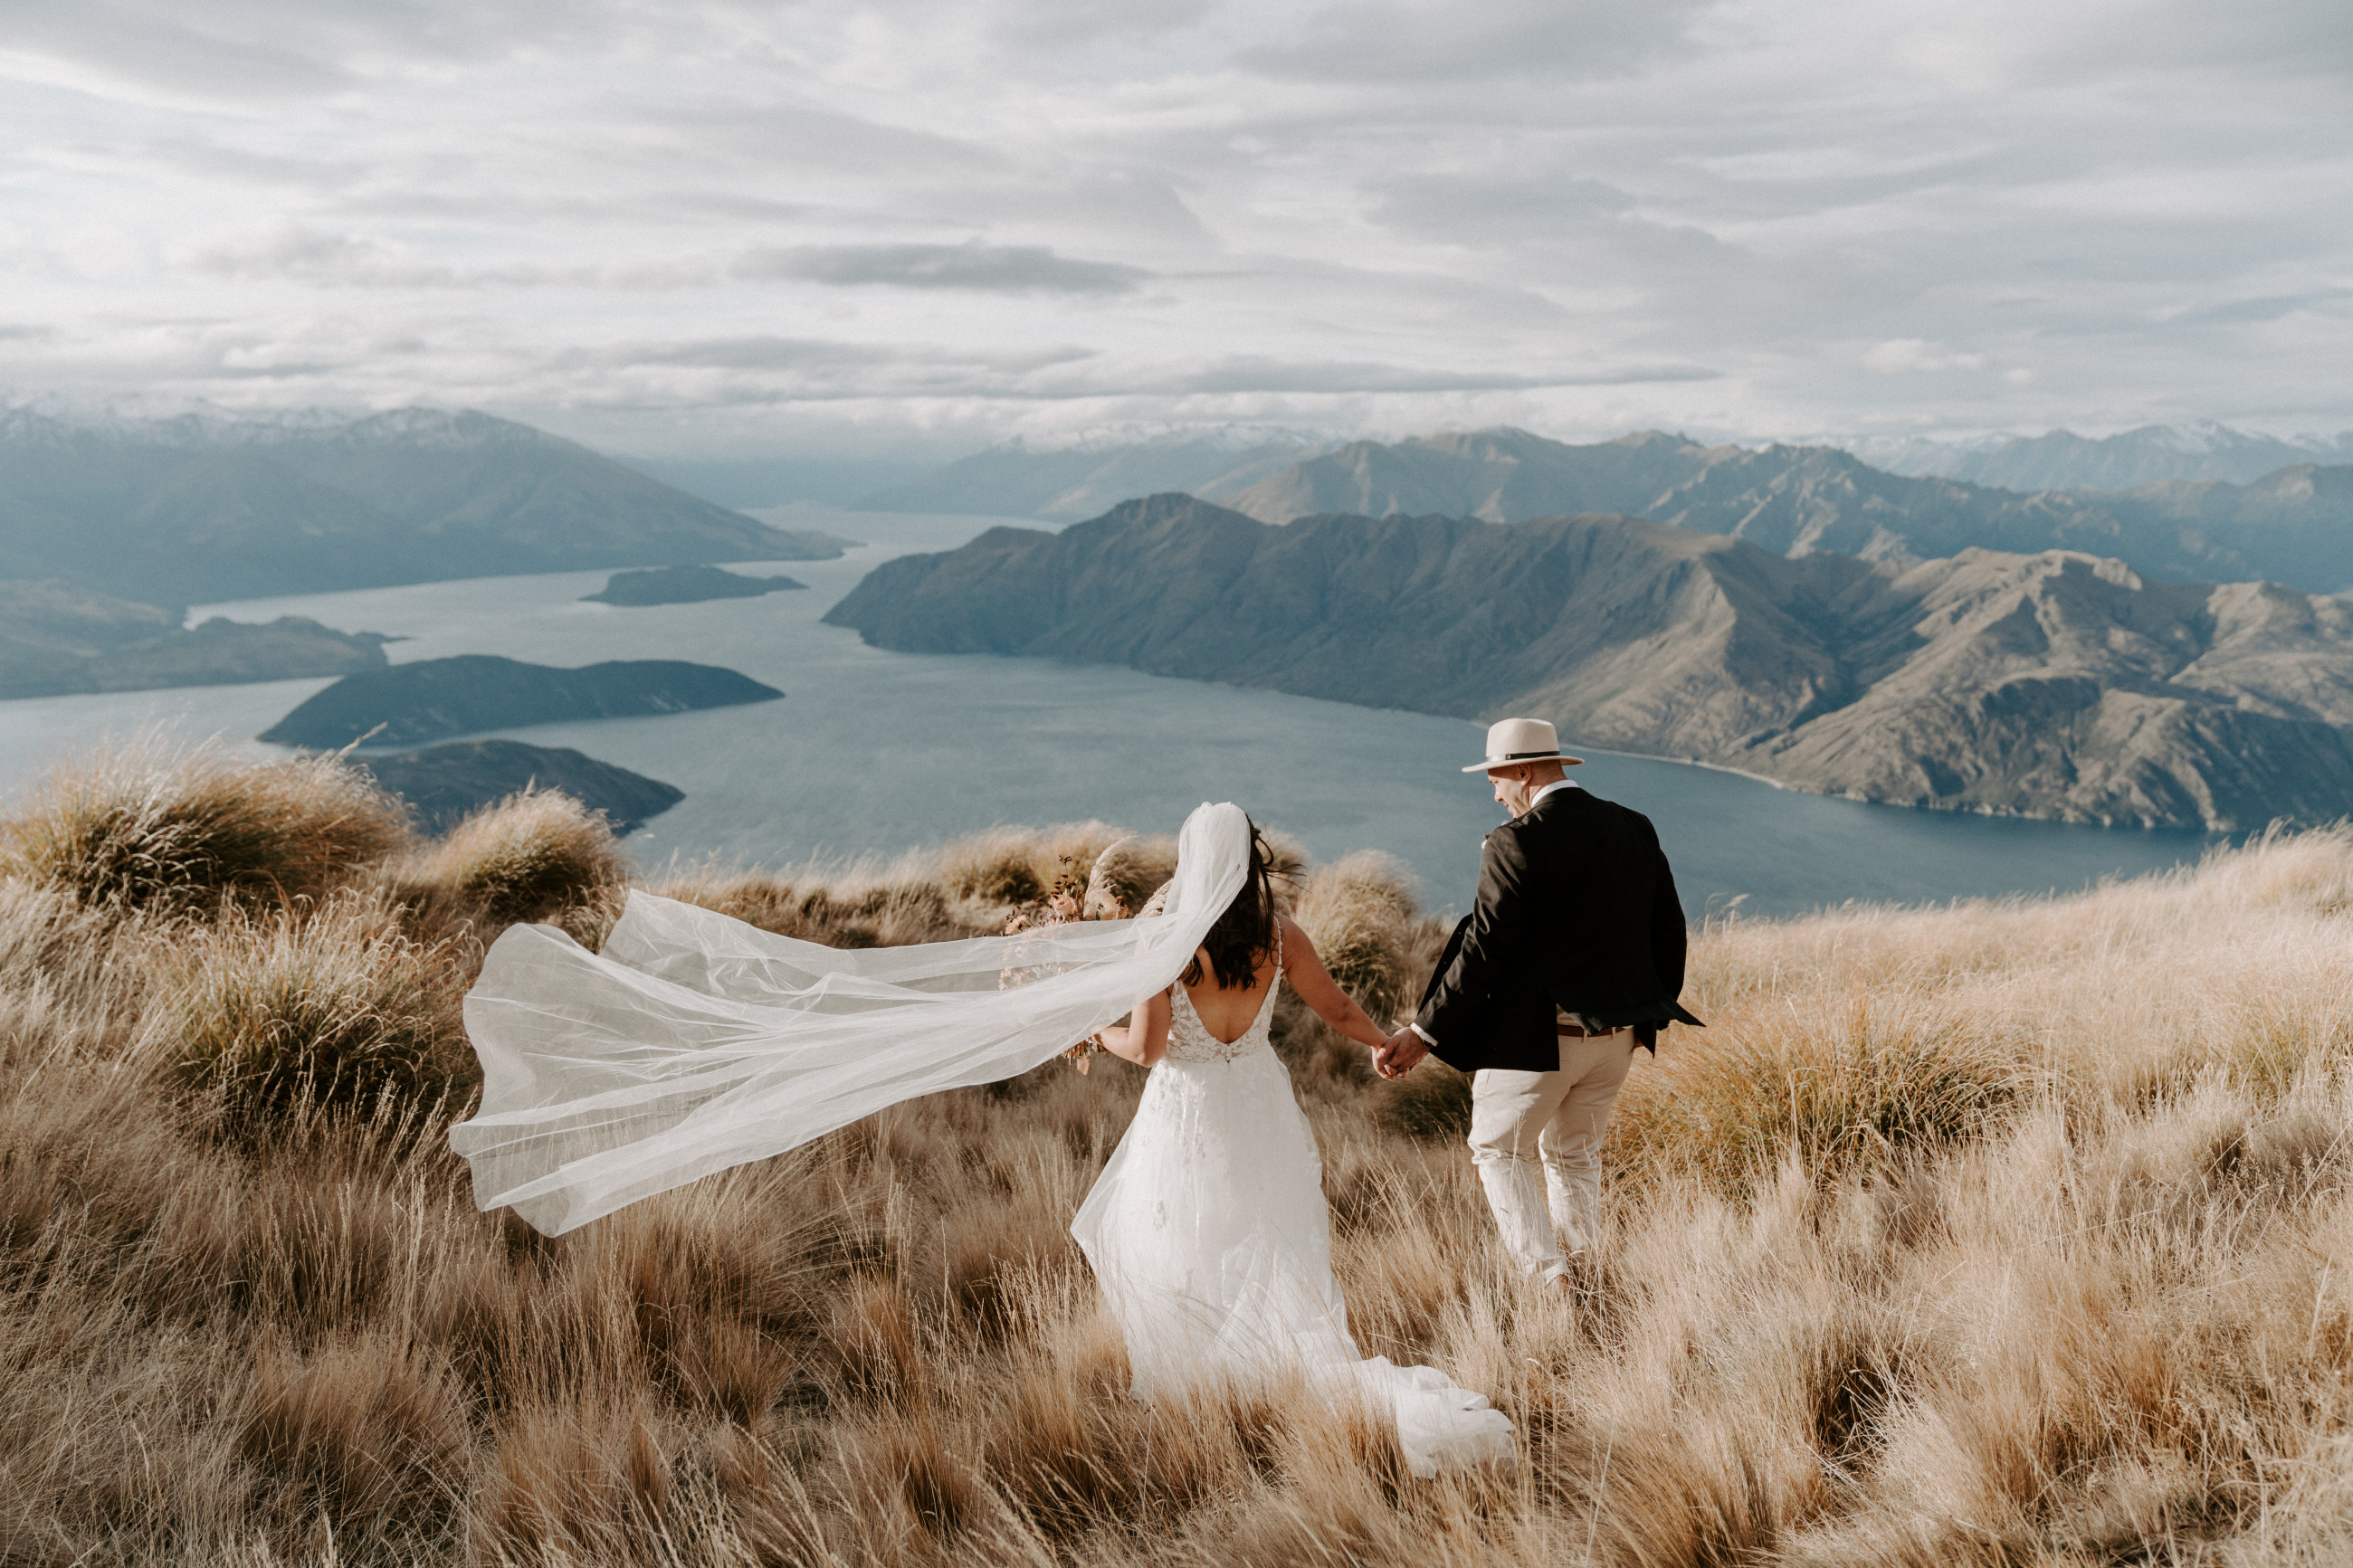 Wedding couple walking through tussoks at the top of coromandel peak. Stunning view of Lake Wānaka in the background.